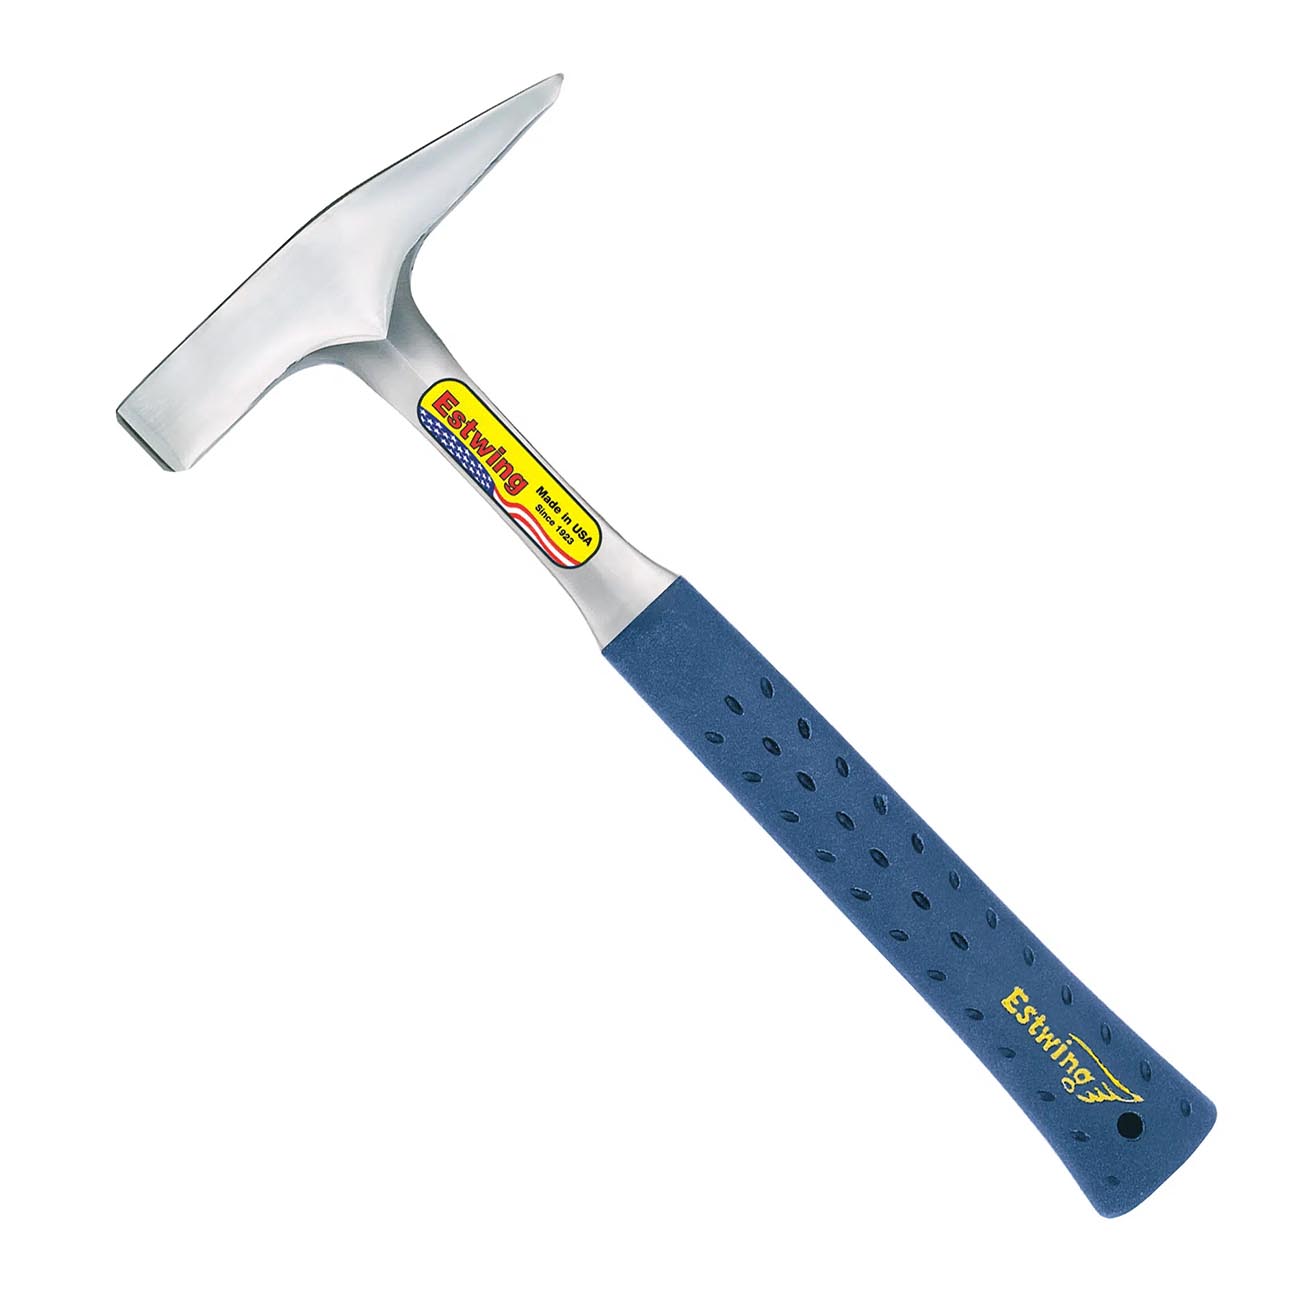 Estwing 18 oz. Tinner's Hammer